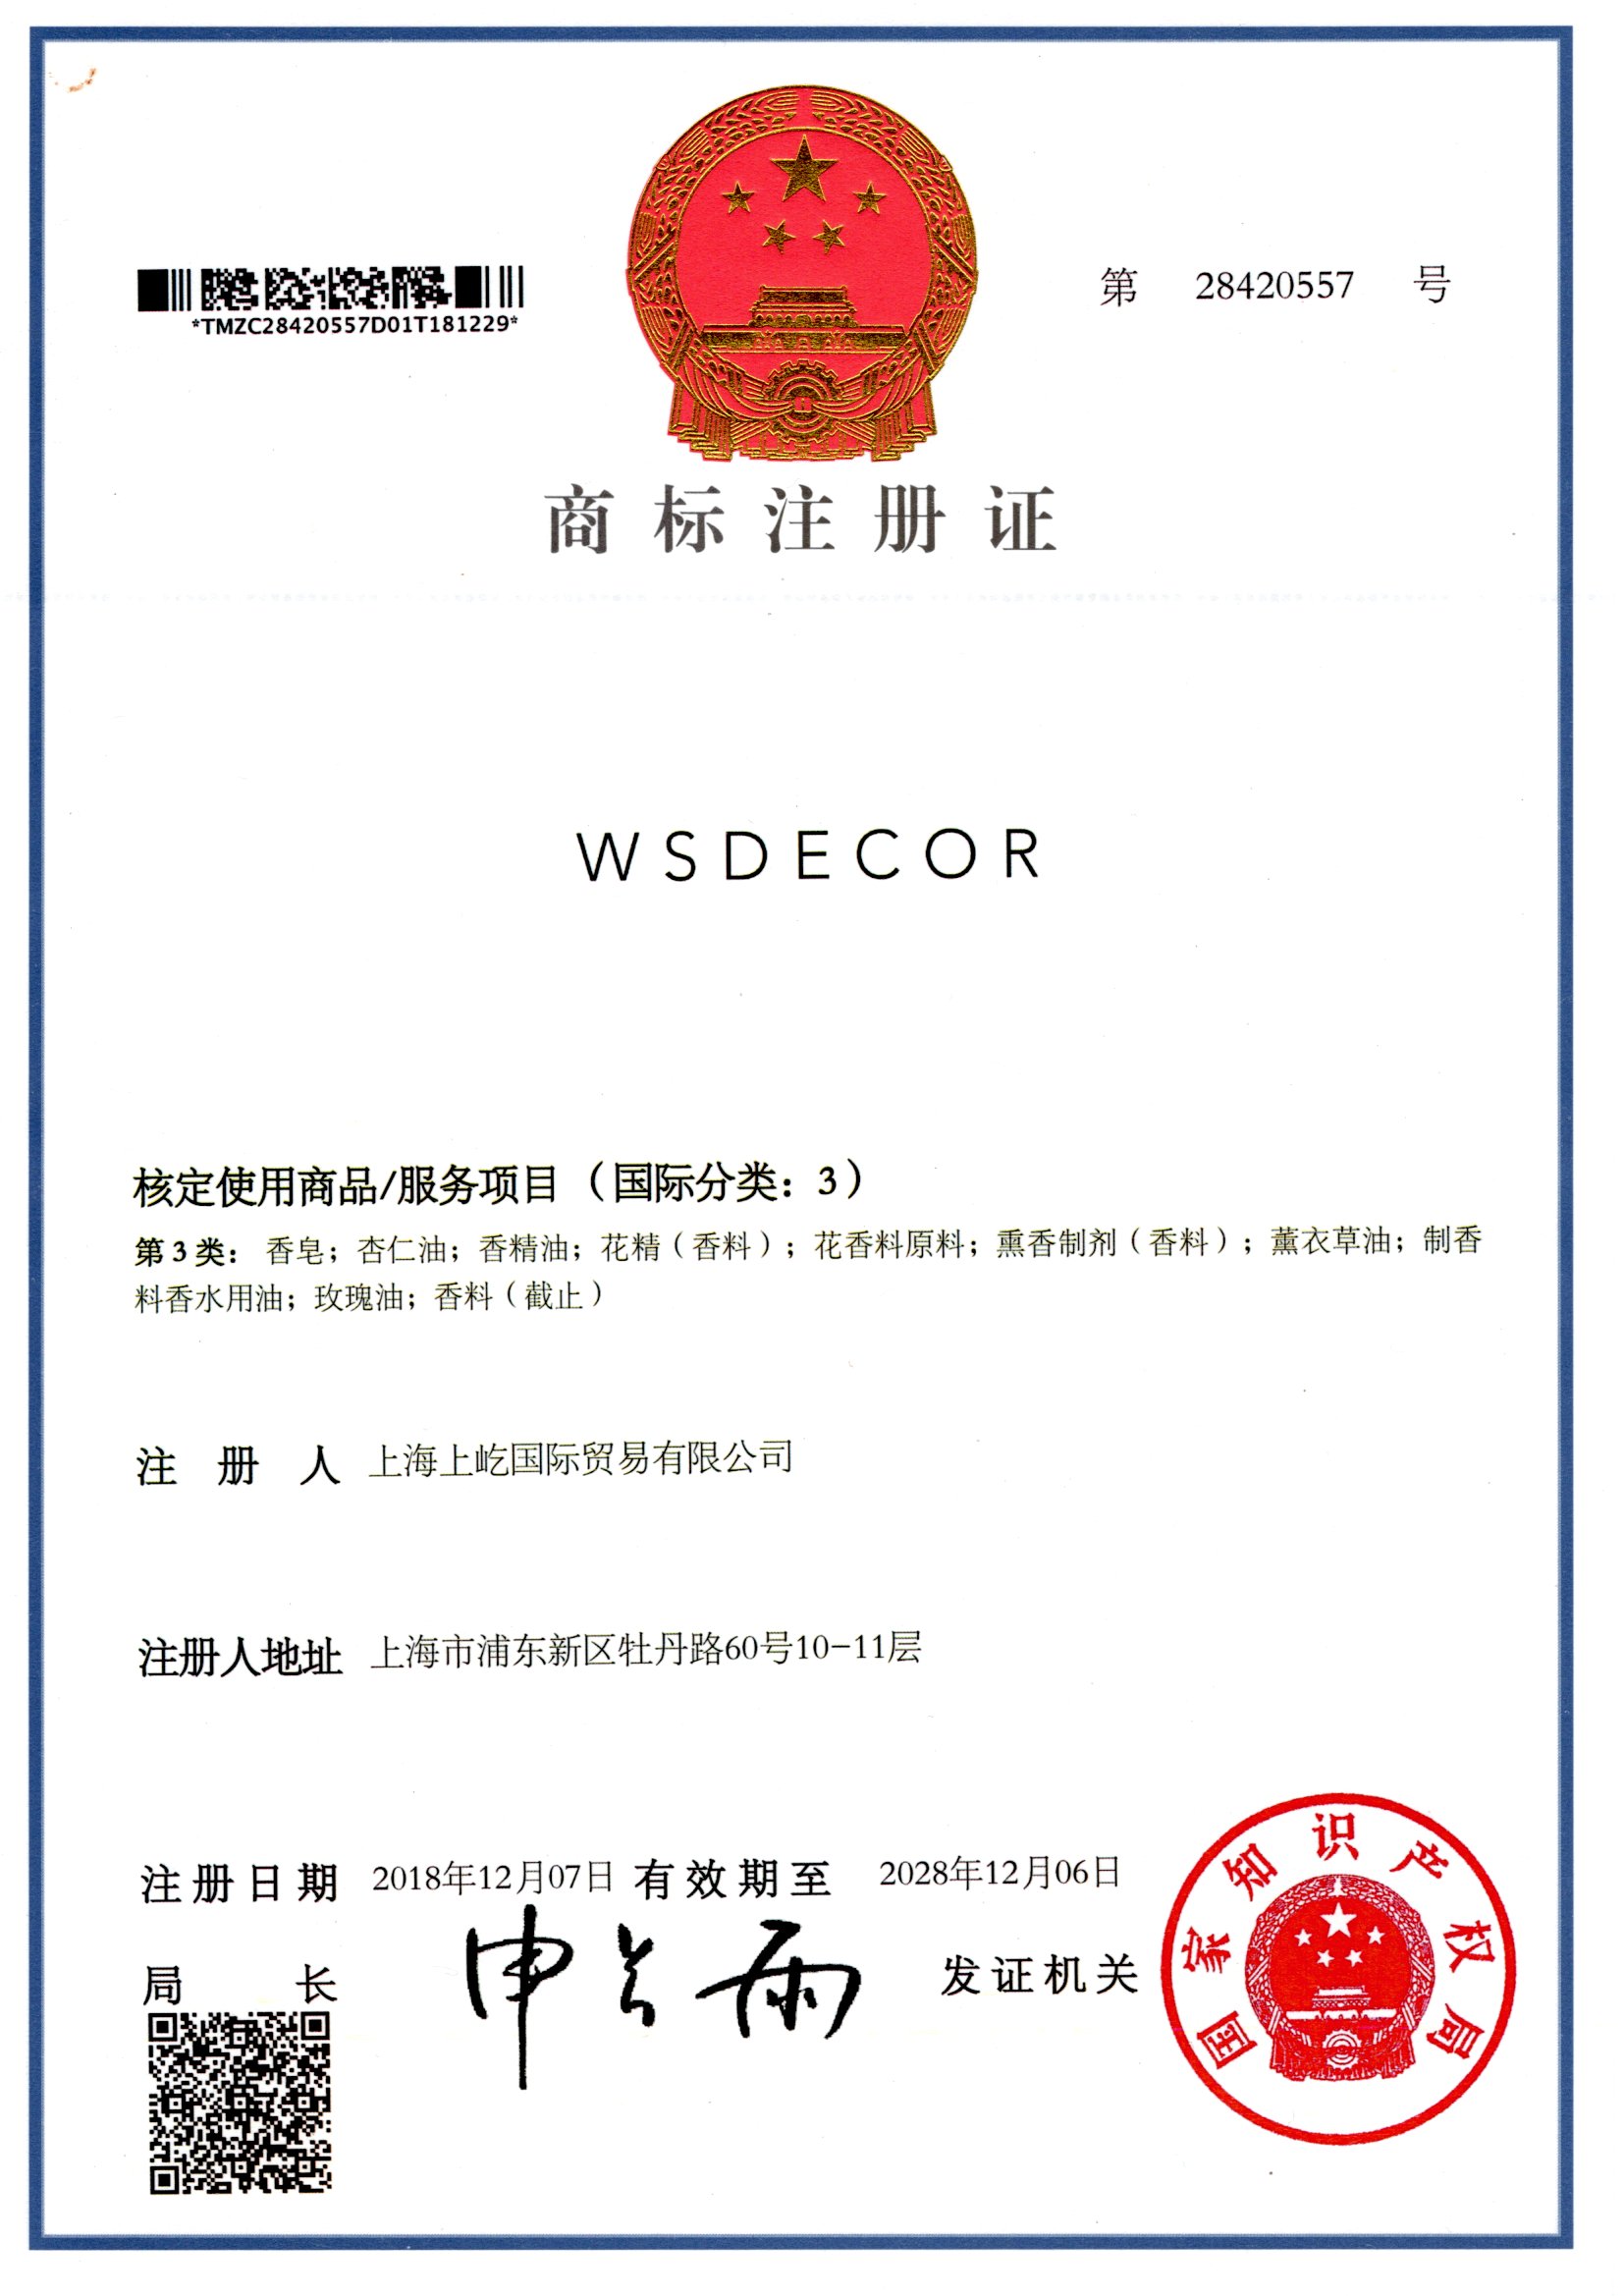 Trademark registration certificate No. 28420557